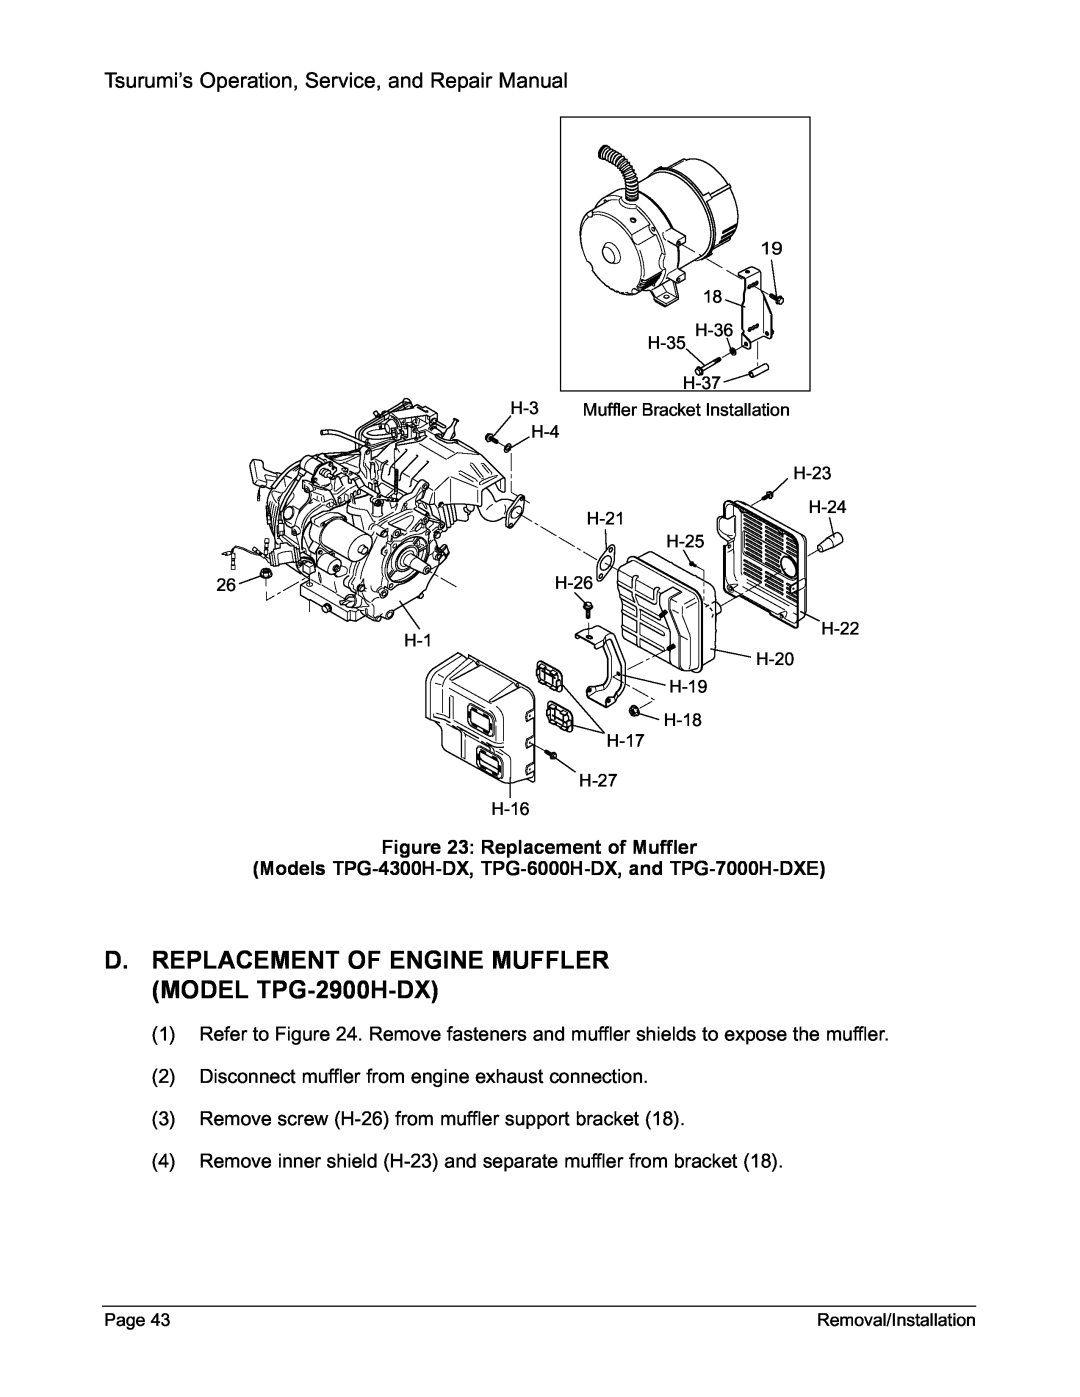 Honda Power Equipment TPG-6000H-DX, TPG-2900H-DX Tsurumi’s Operation, Service, and Repair Manual, Replacement of Muffler 